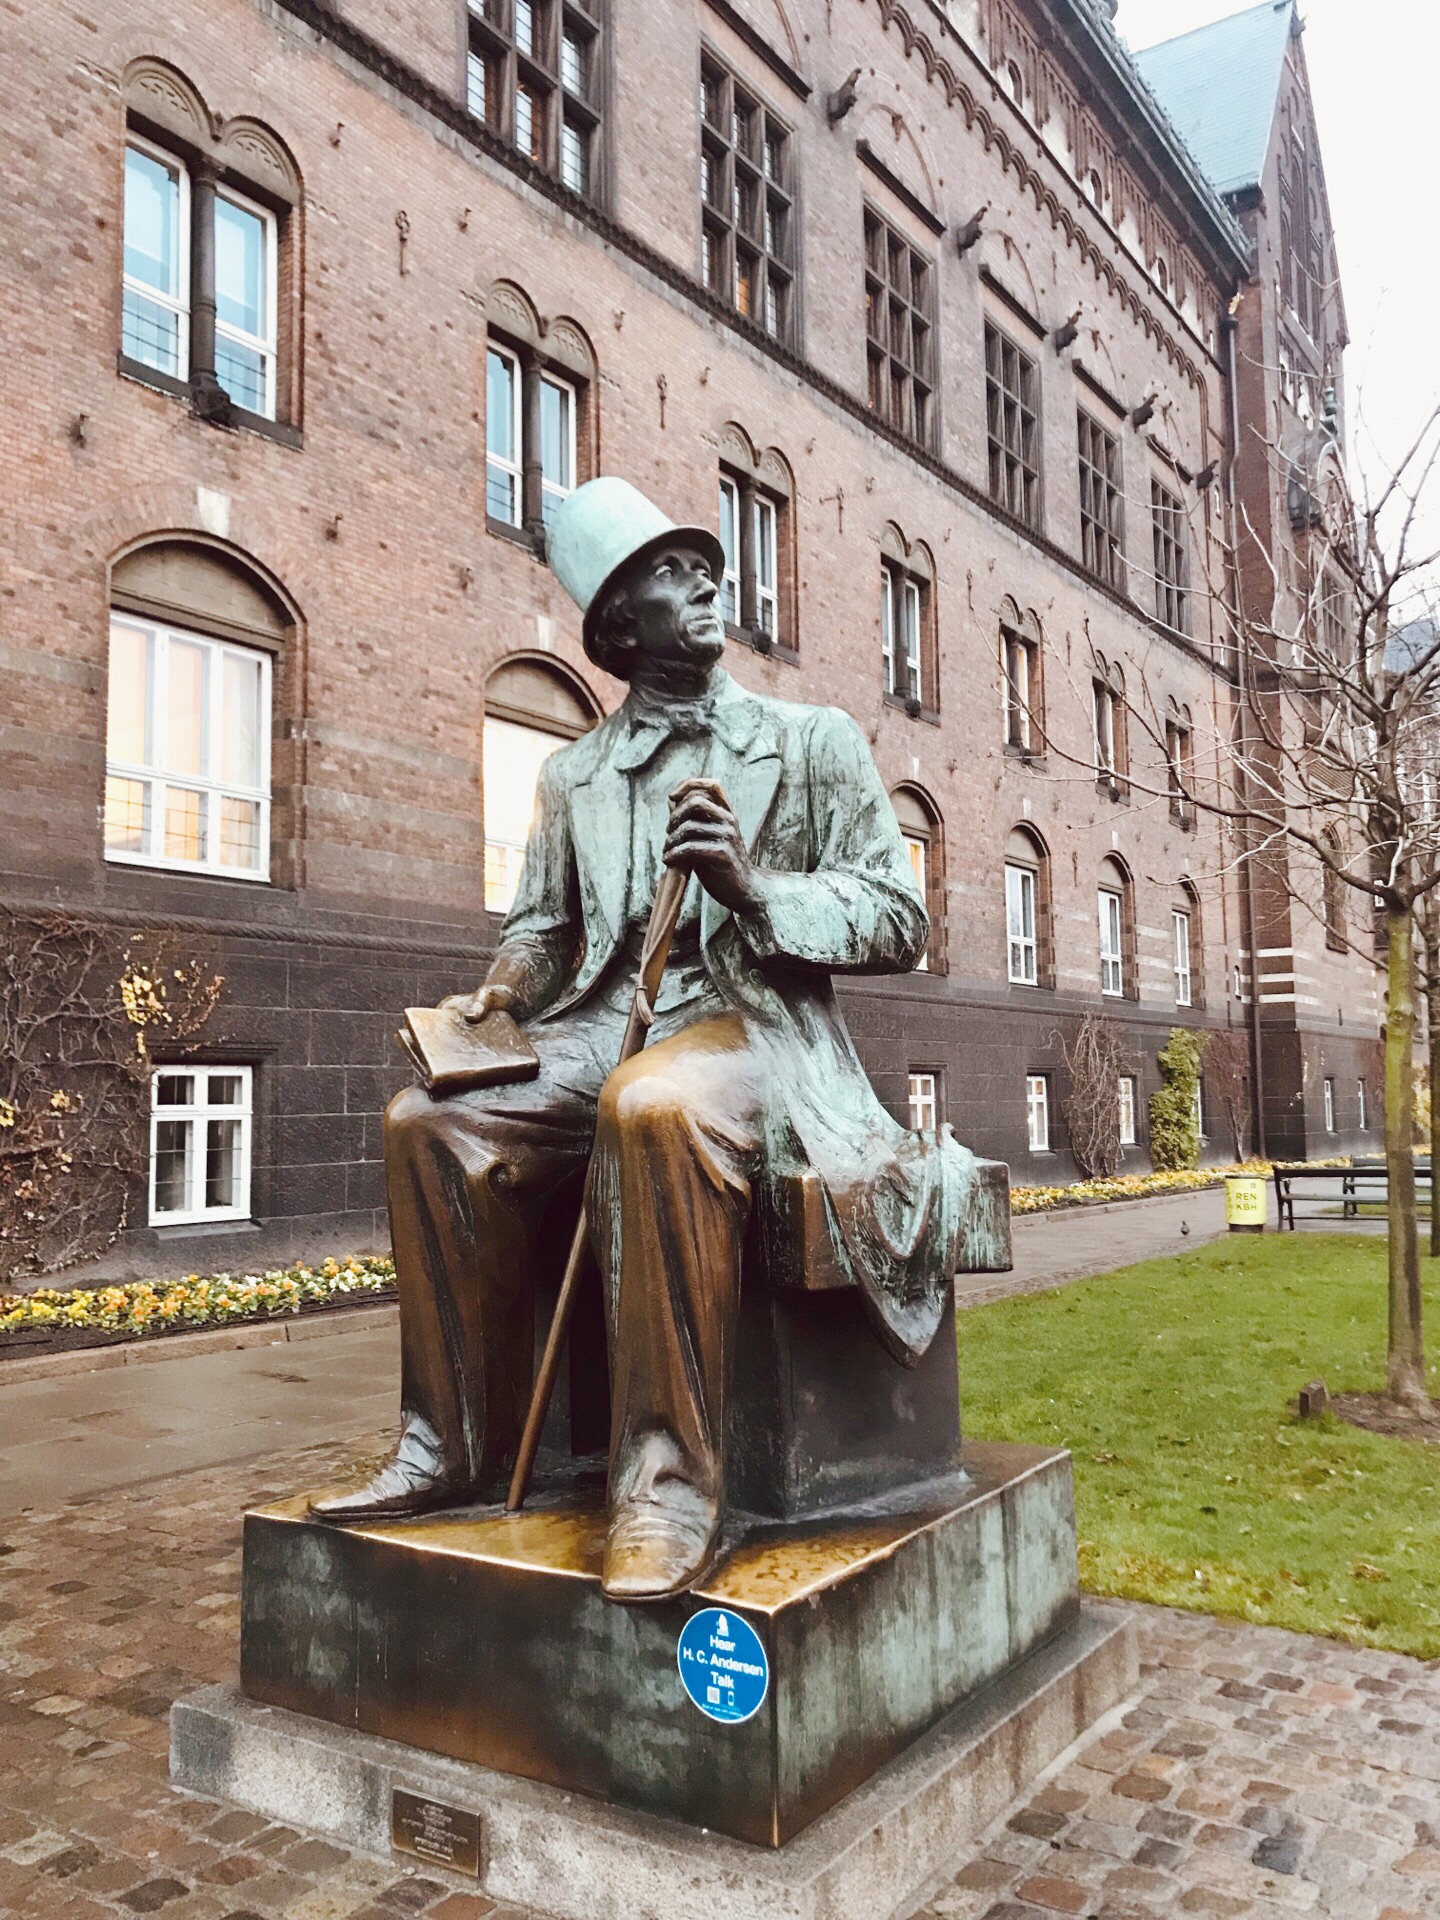 Statue of Hans Christian Andersen attraction reviews - Statue of Hans  Christian Andersen tickets - Statue of Hans Christian Andersen discounts -  Statue of Hans Christian Andersen transportation, address, opening hours -